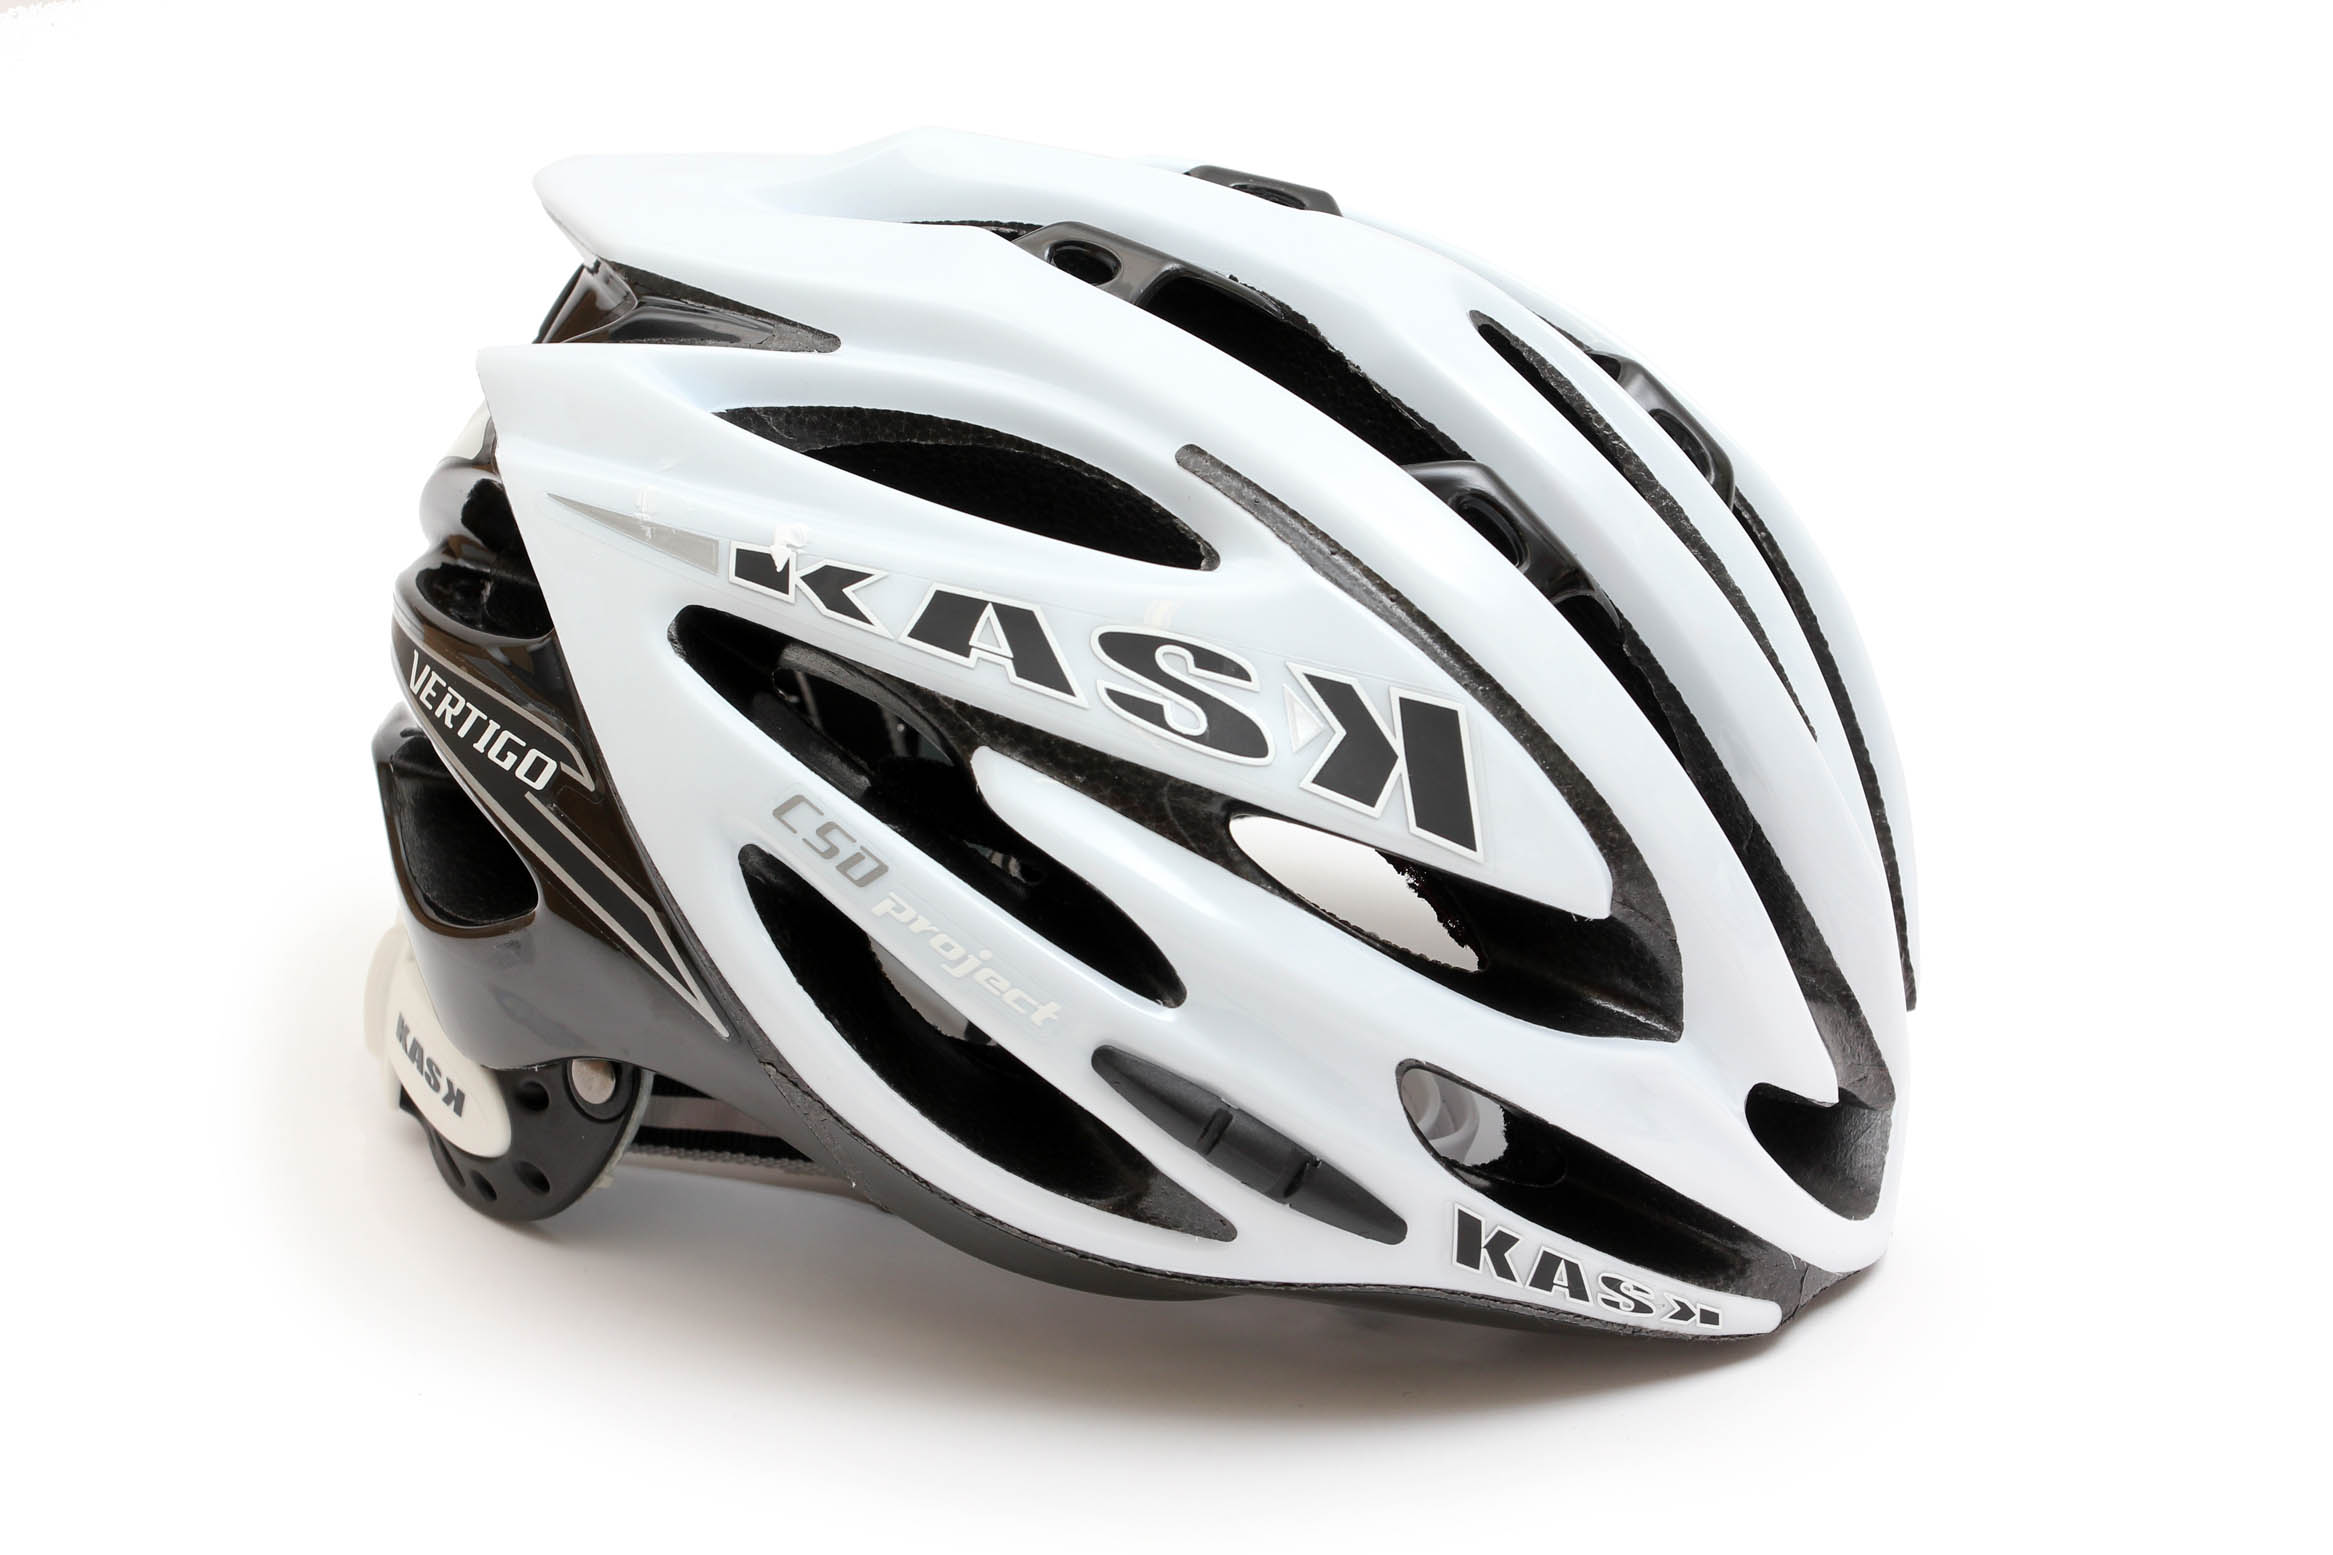 Kask Vertigo C50 helmet | road.cc